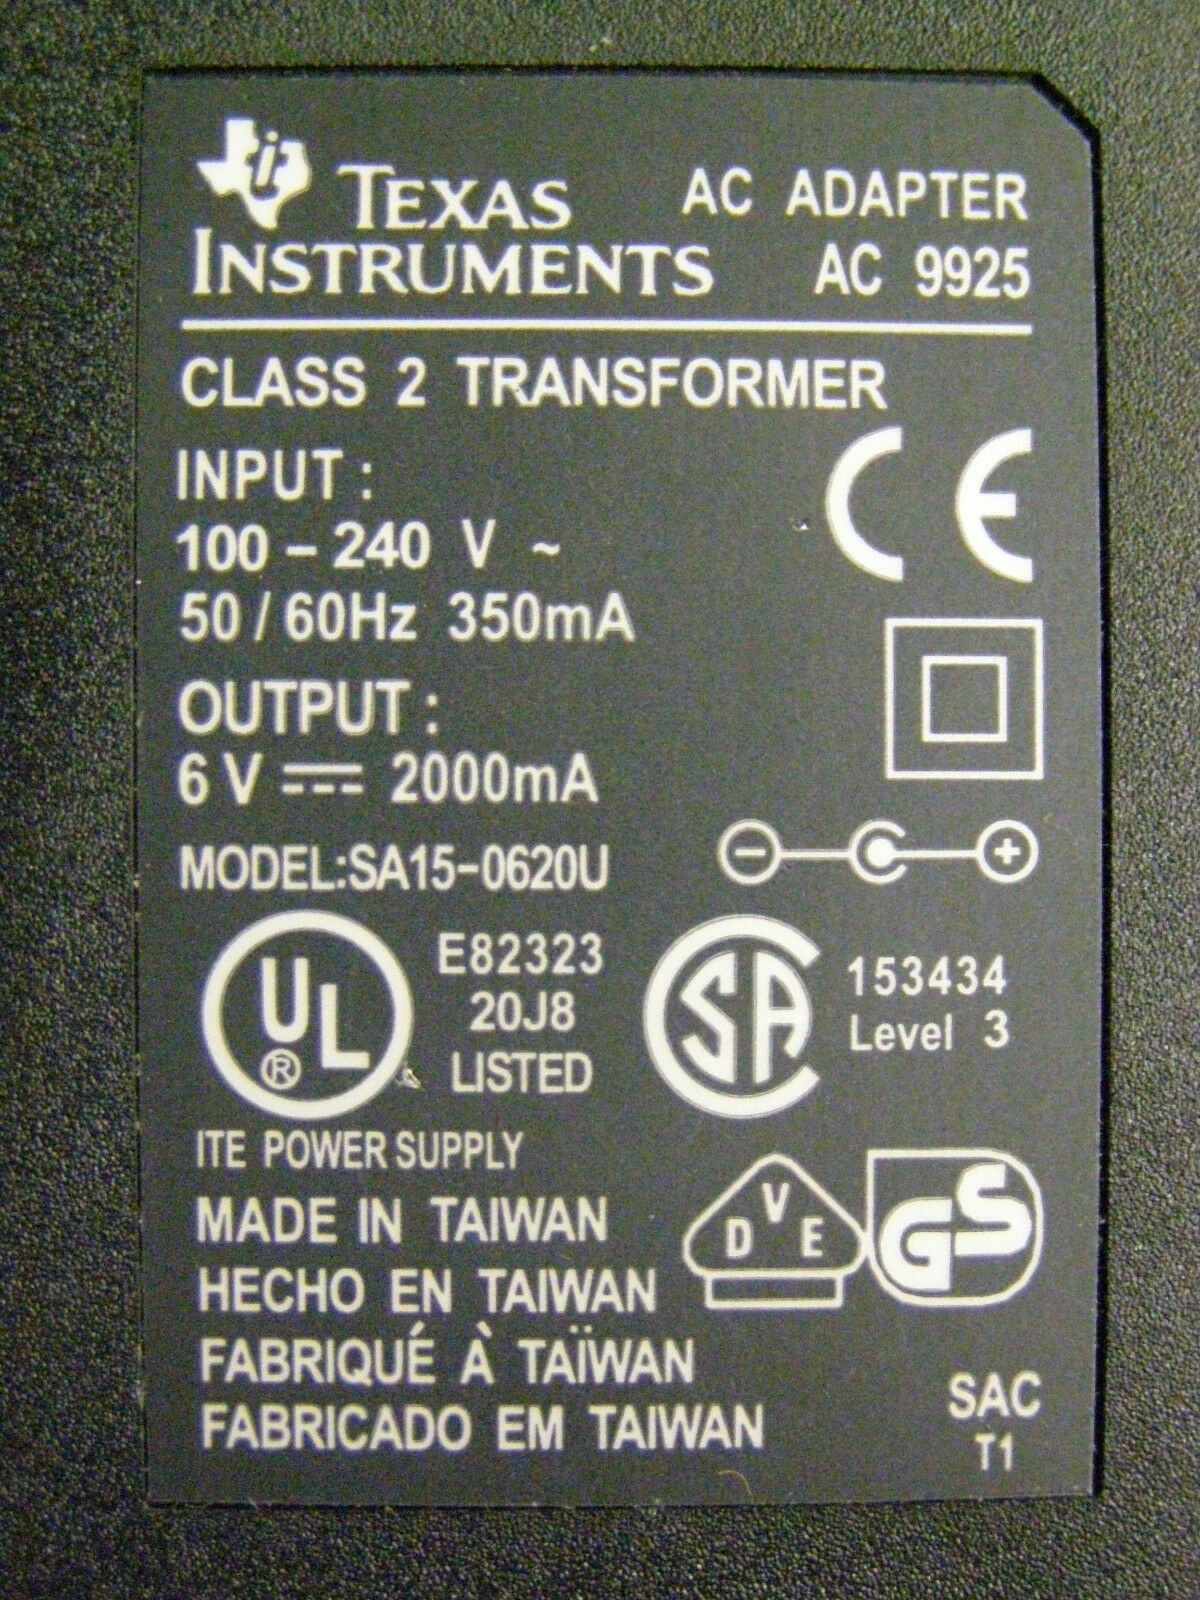 *Brand NEW* 6V 2A TEXAS INSTRUMENTS SA15-0620U Class 2 Transformer Ac Adapter